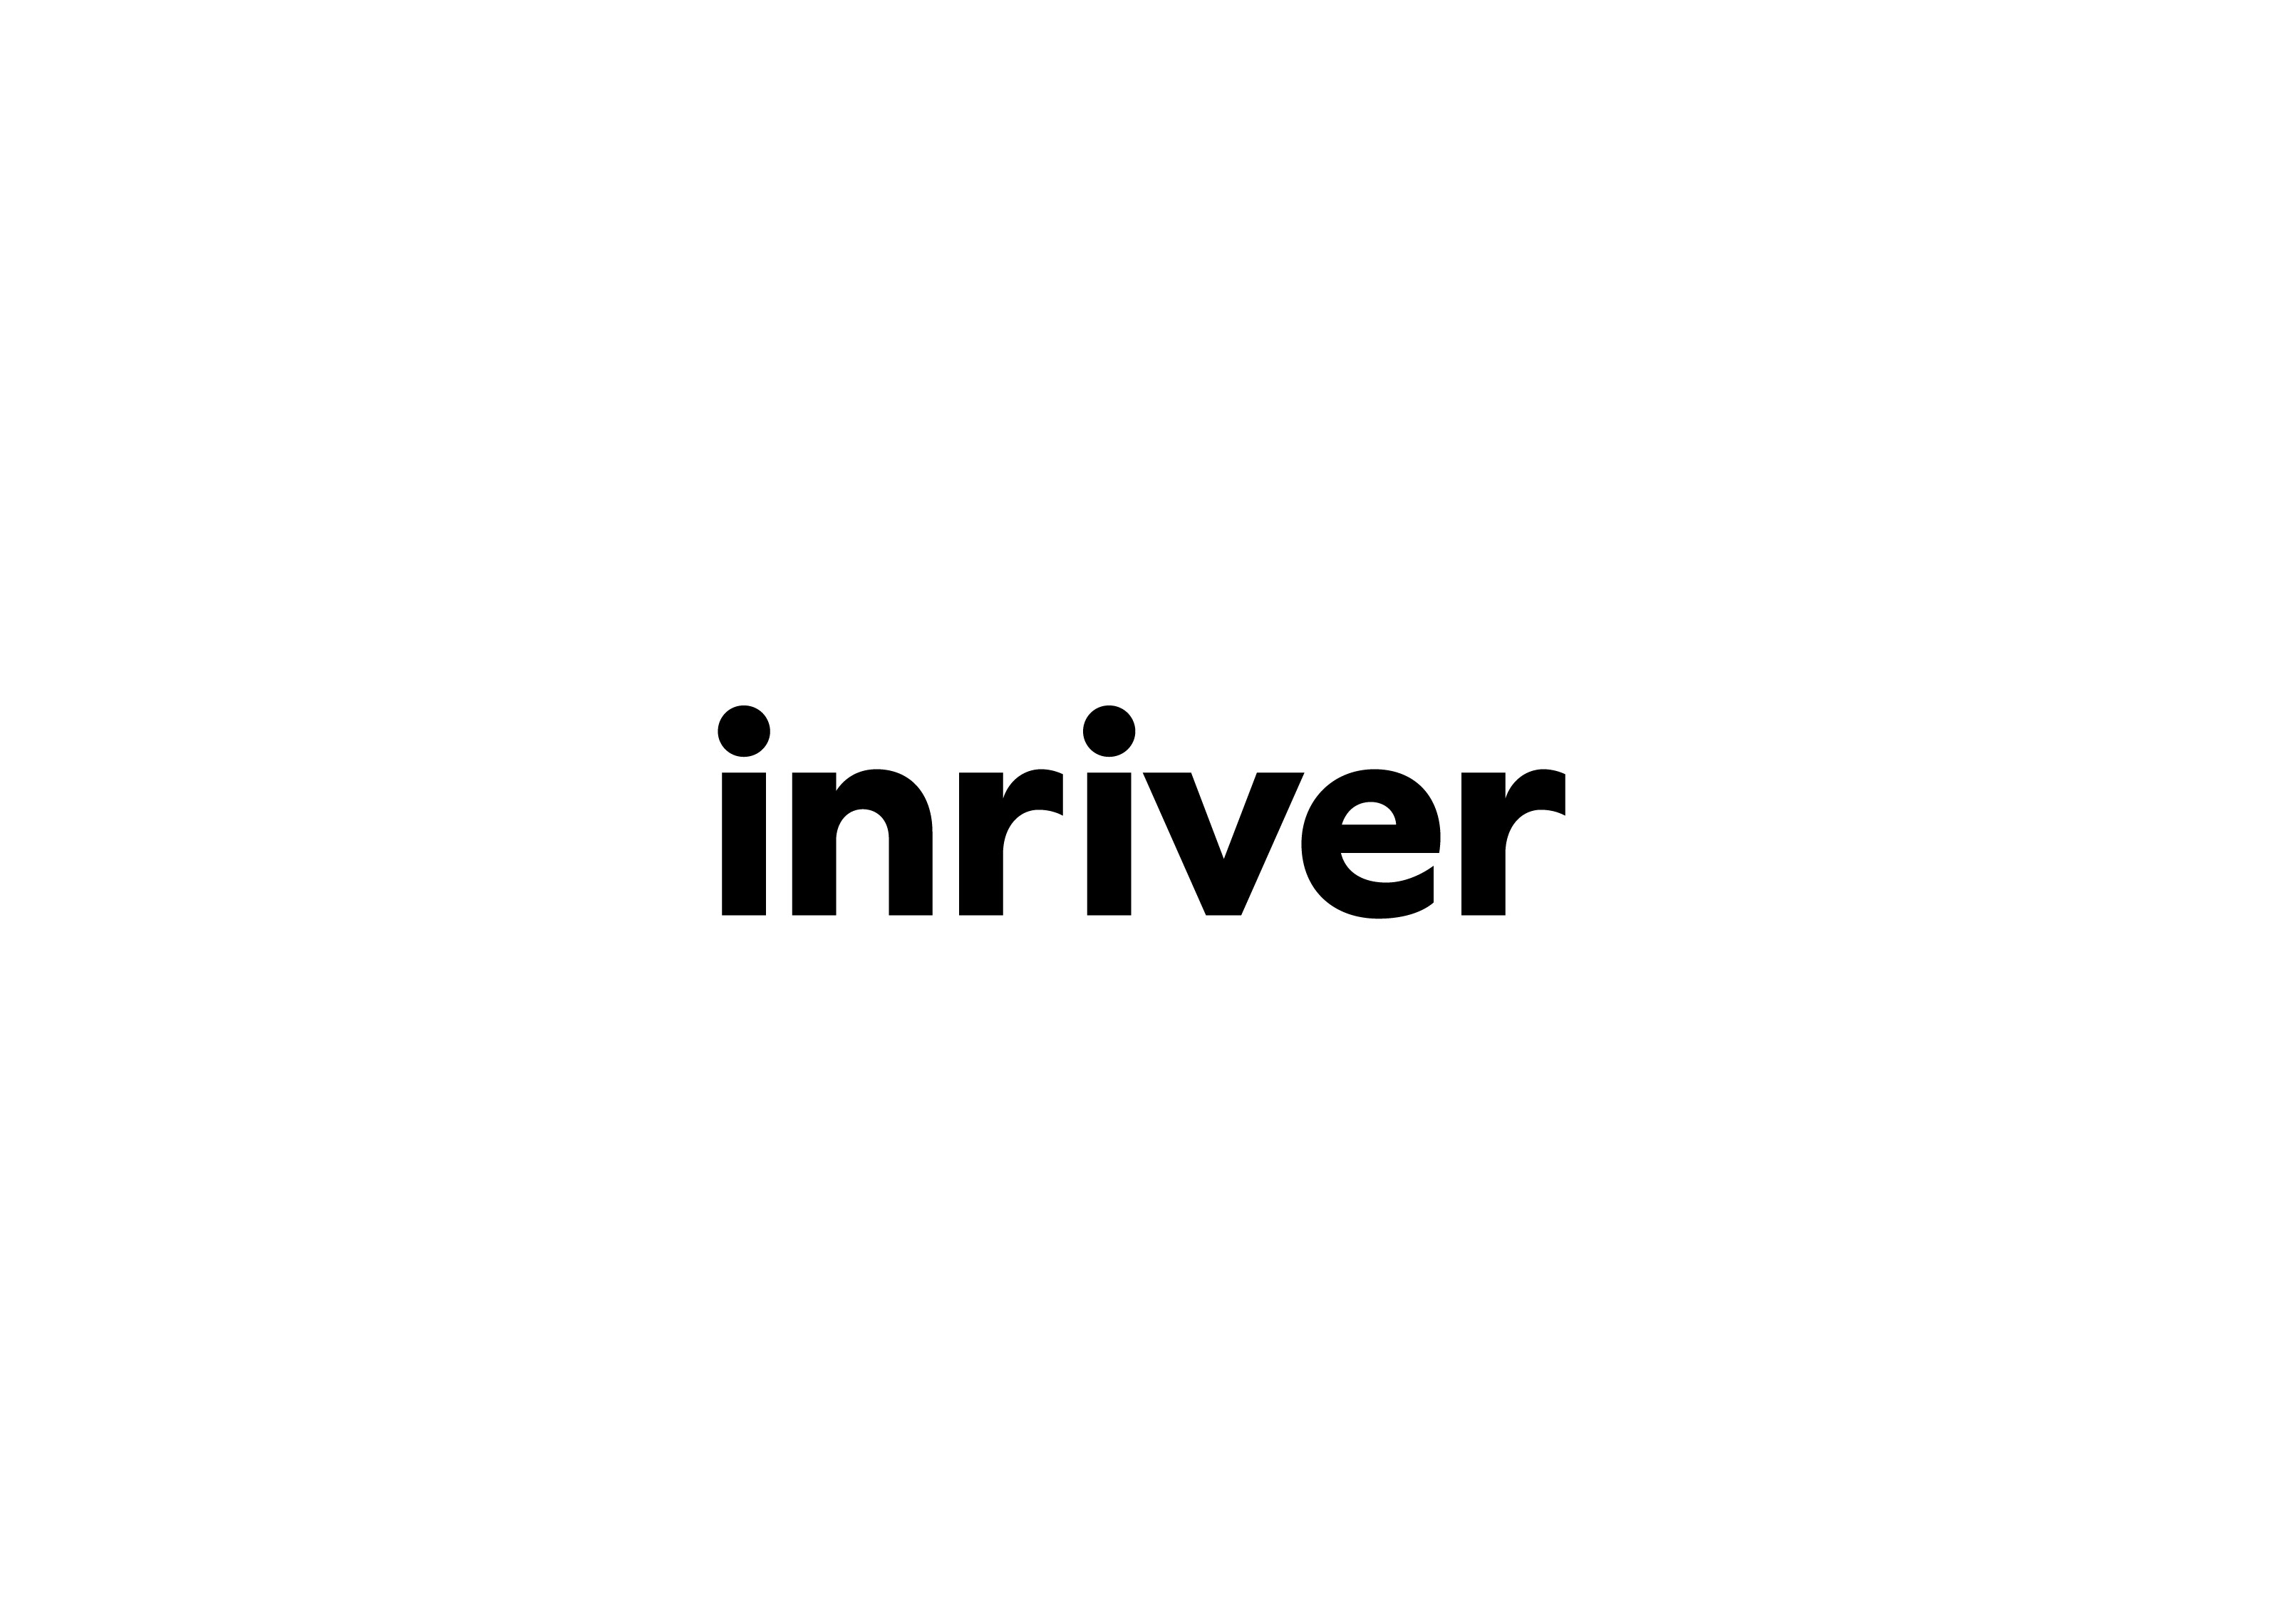 inriver-logo_knockout-769x537.jpg